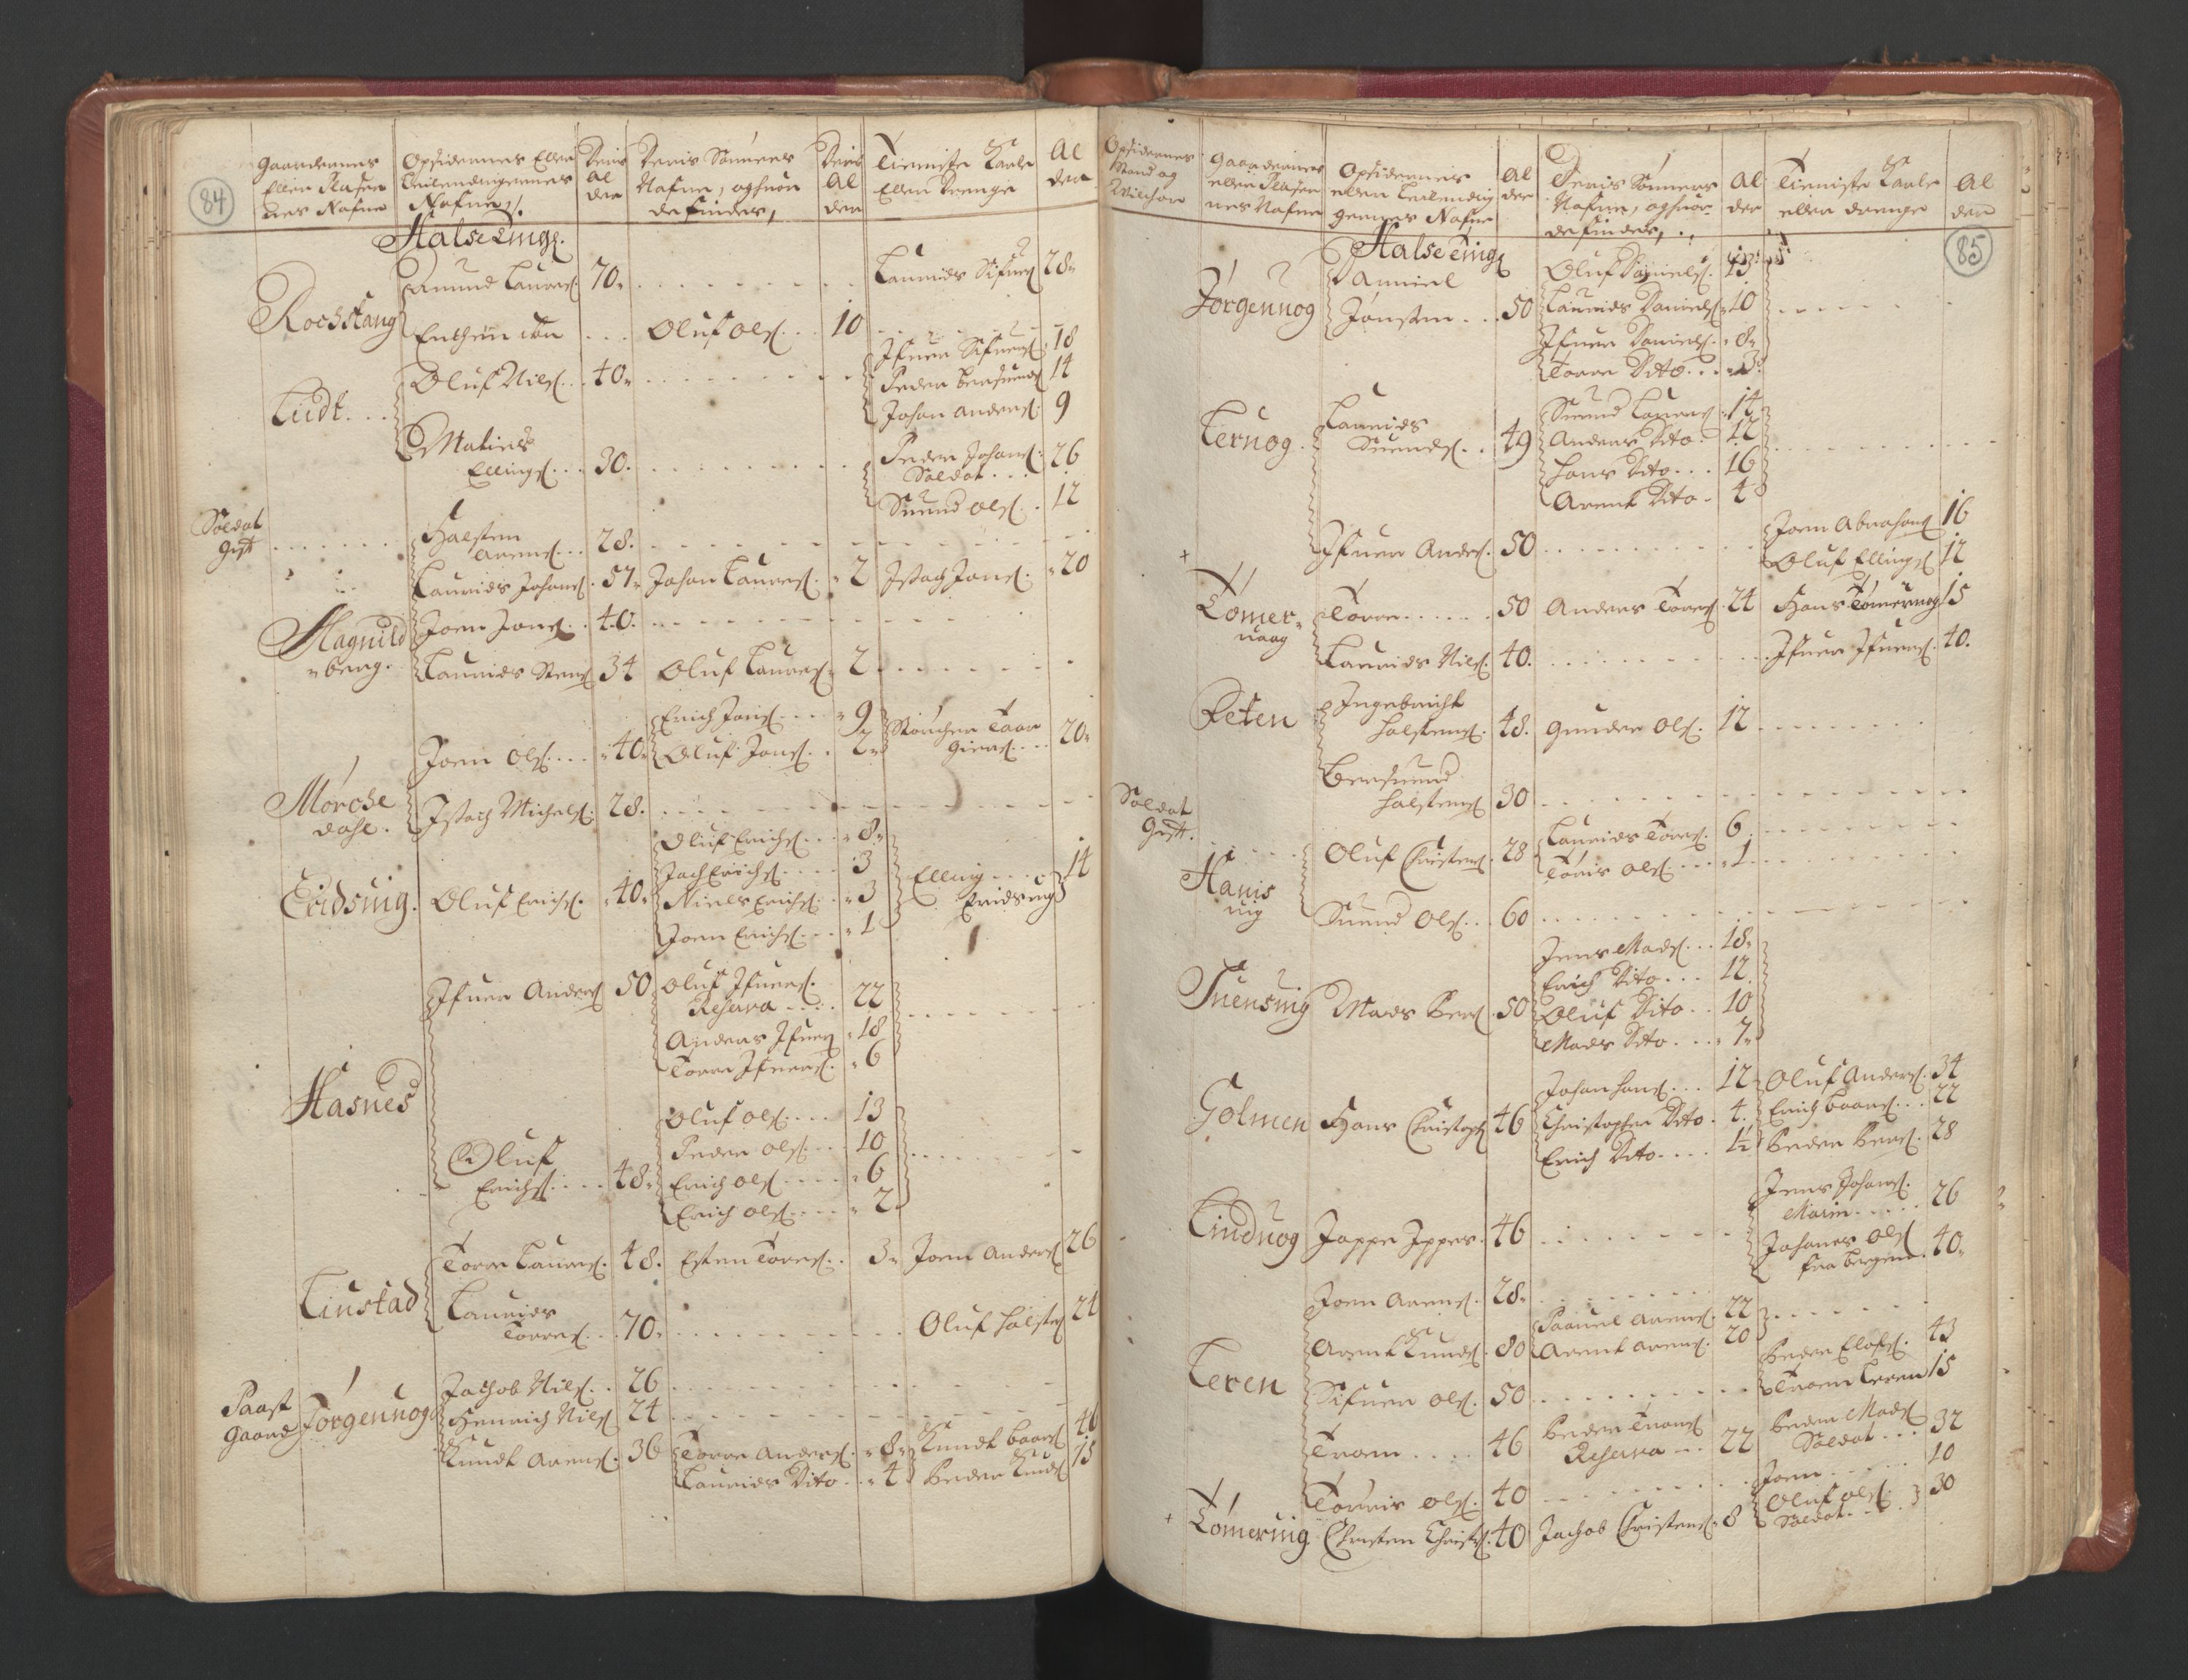 RA, Manntallet 1701, nr. 11: Nordmøre fogderi og Romsdal fogderi, 1701, s. 84-85